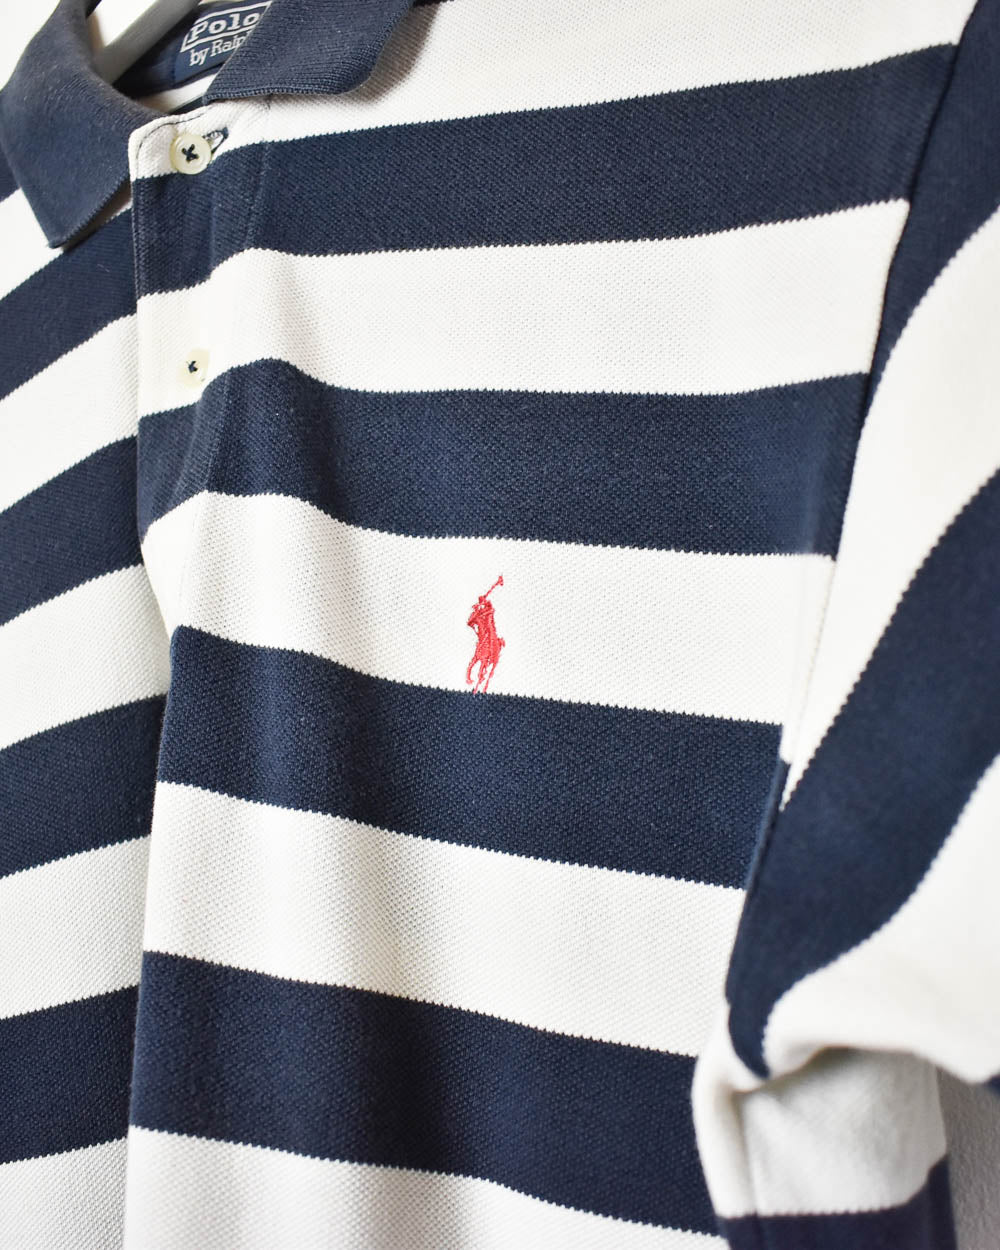 Navy Polo Ralph Lauren Striped Polo Shirt - Medium